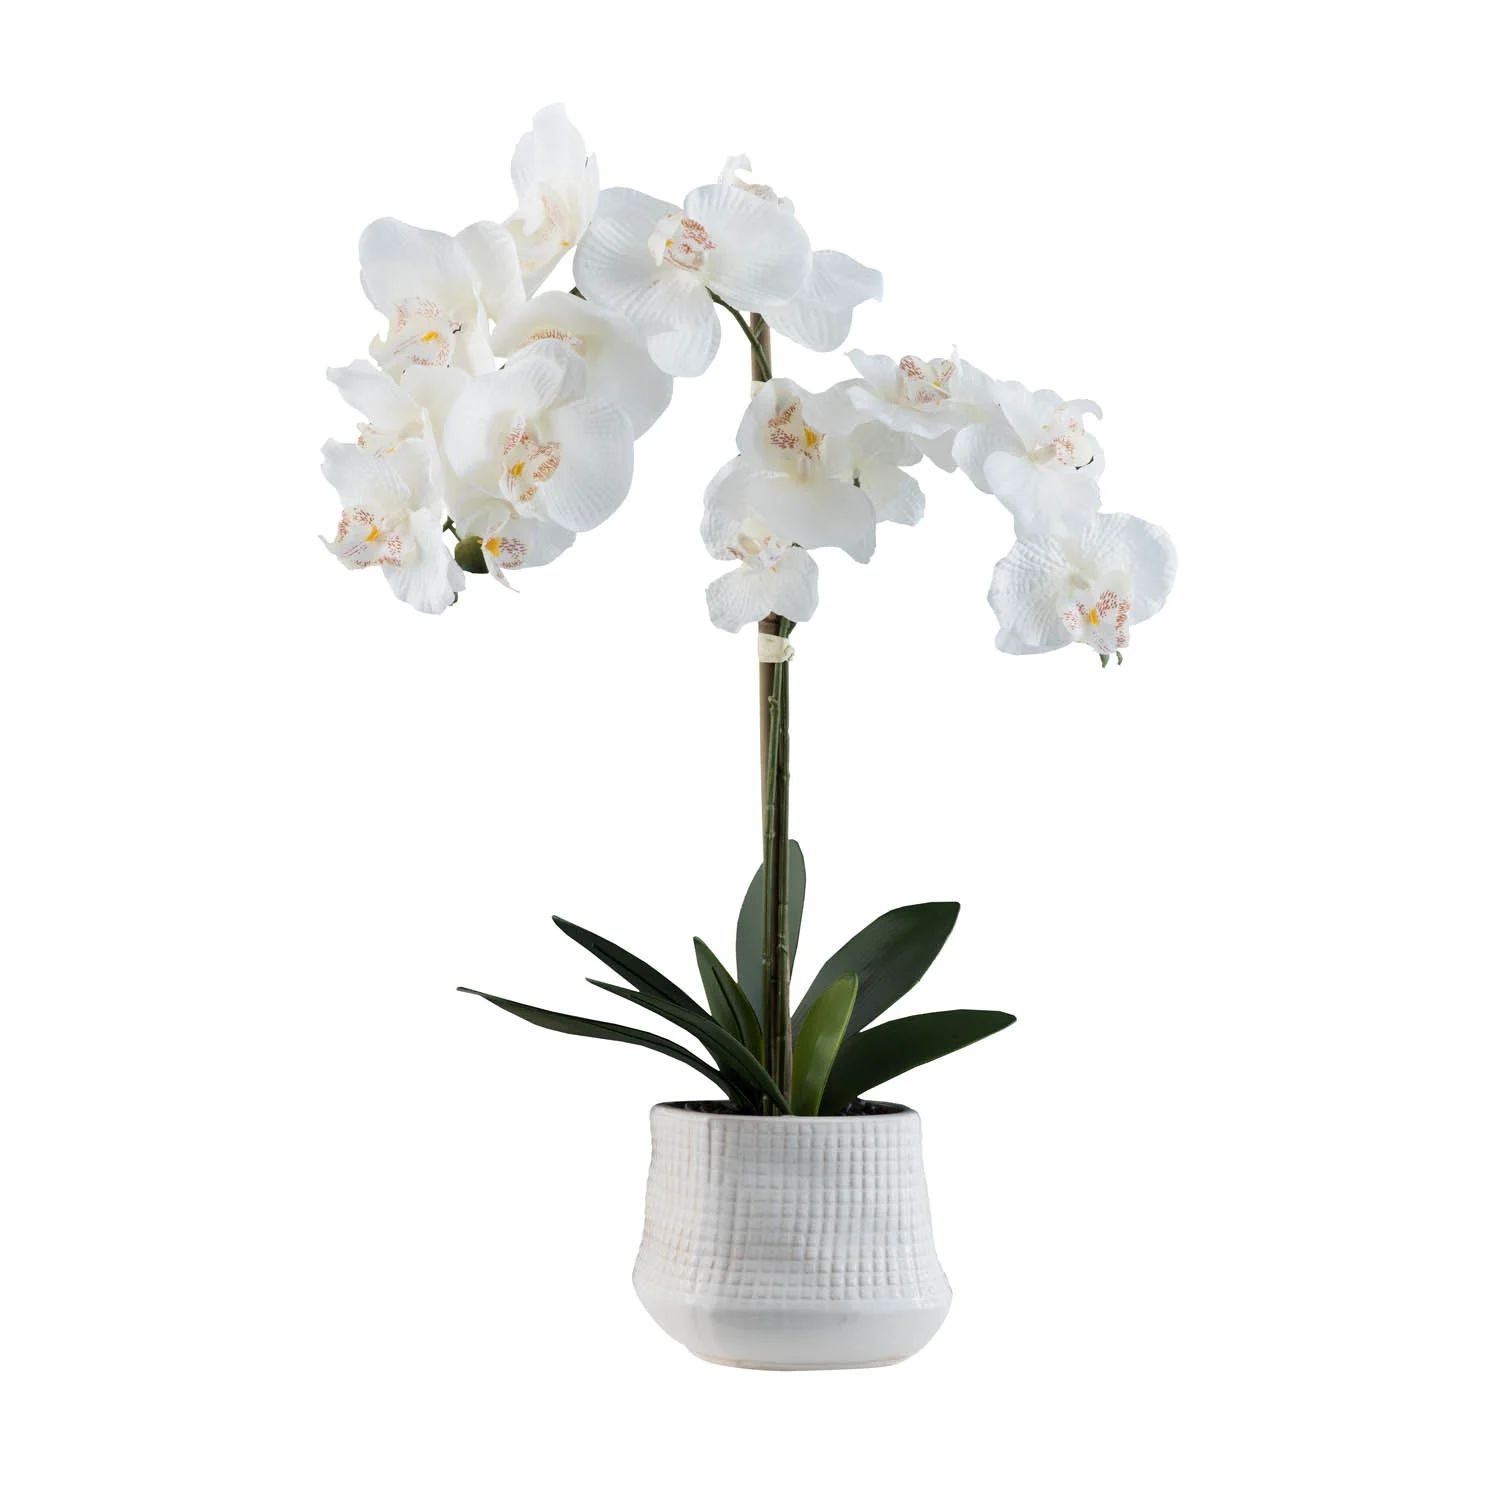 Orchid Floral Centerpiece in Pot | Wayfair Professional